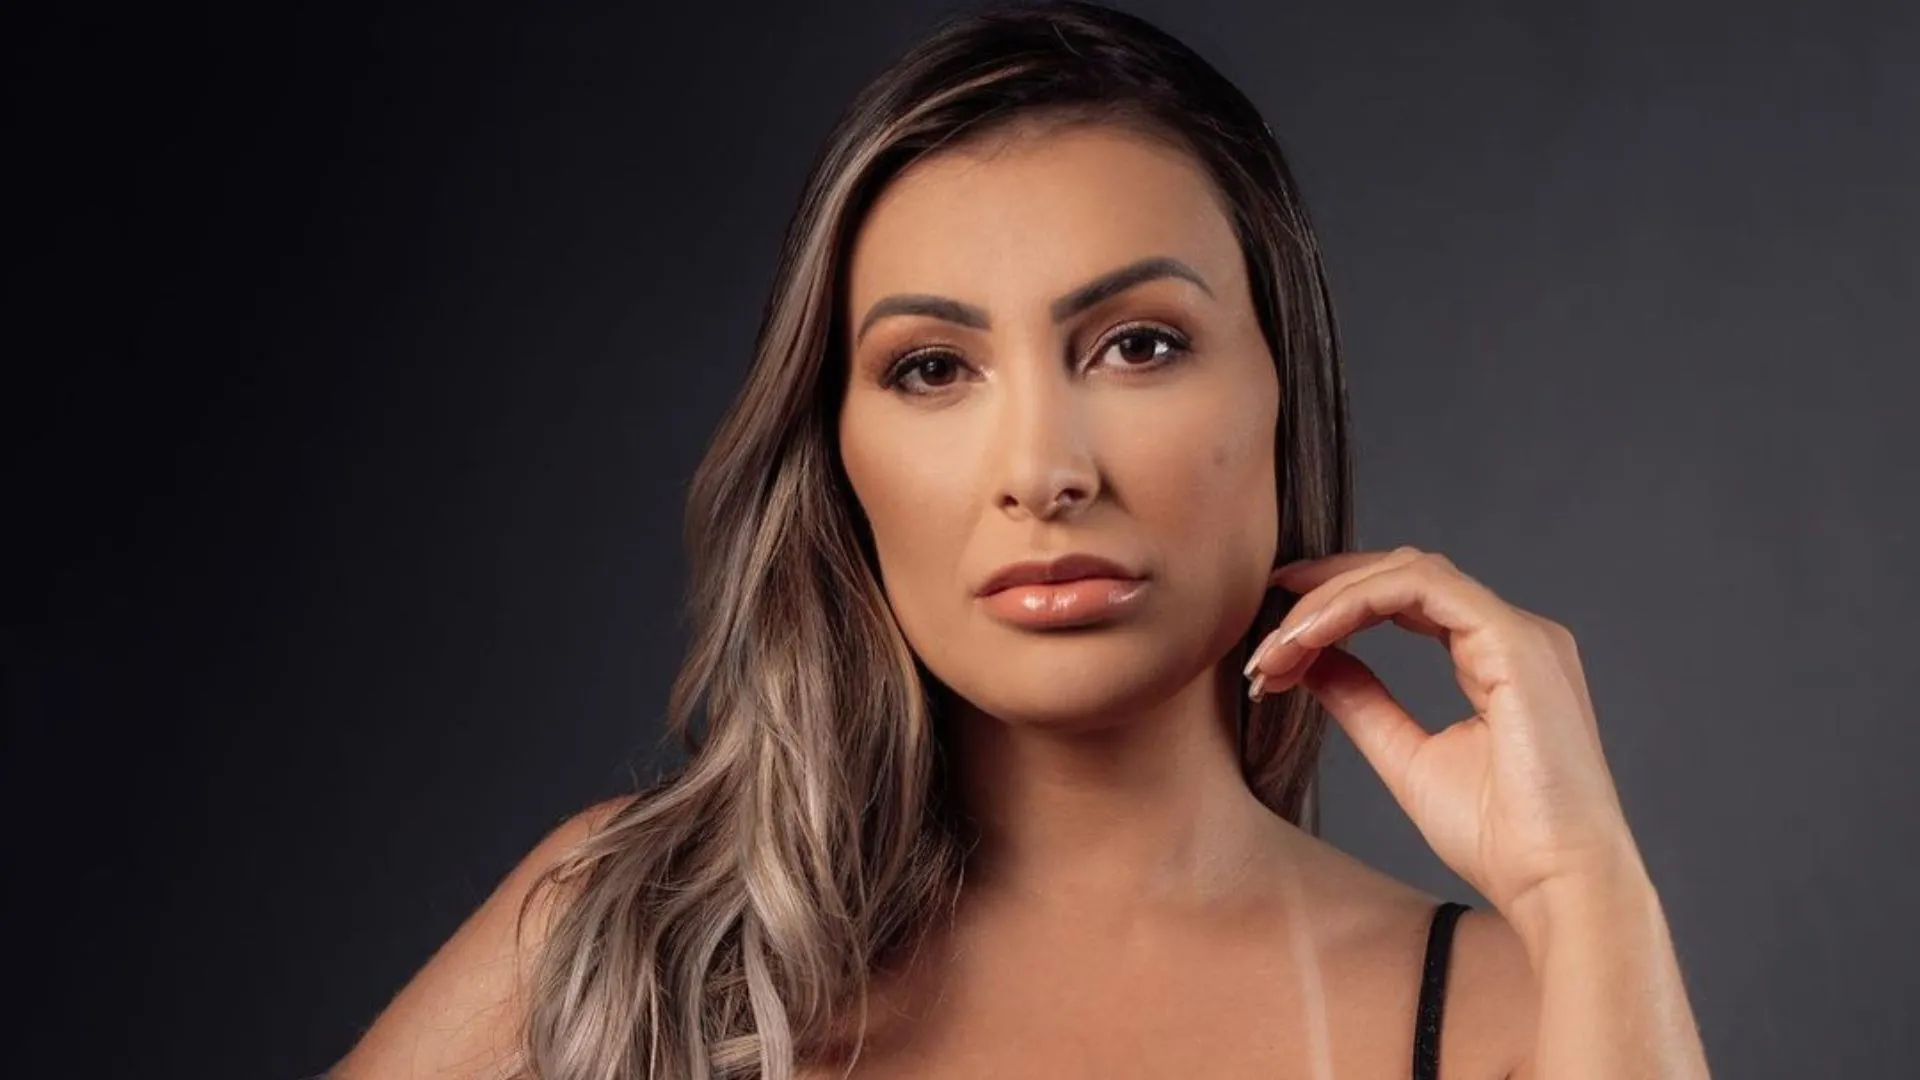 Influenciadora vai apresentar o concurso 'Miss Bumbum Brasil' este ano